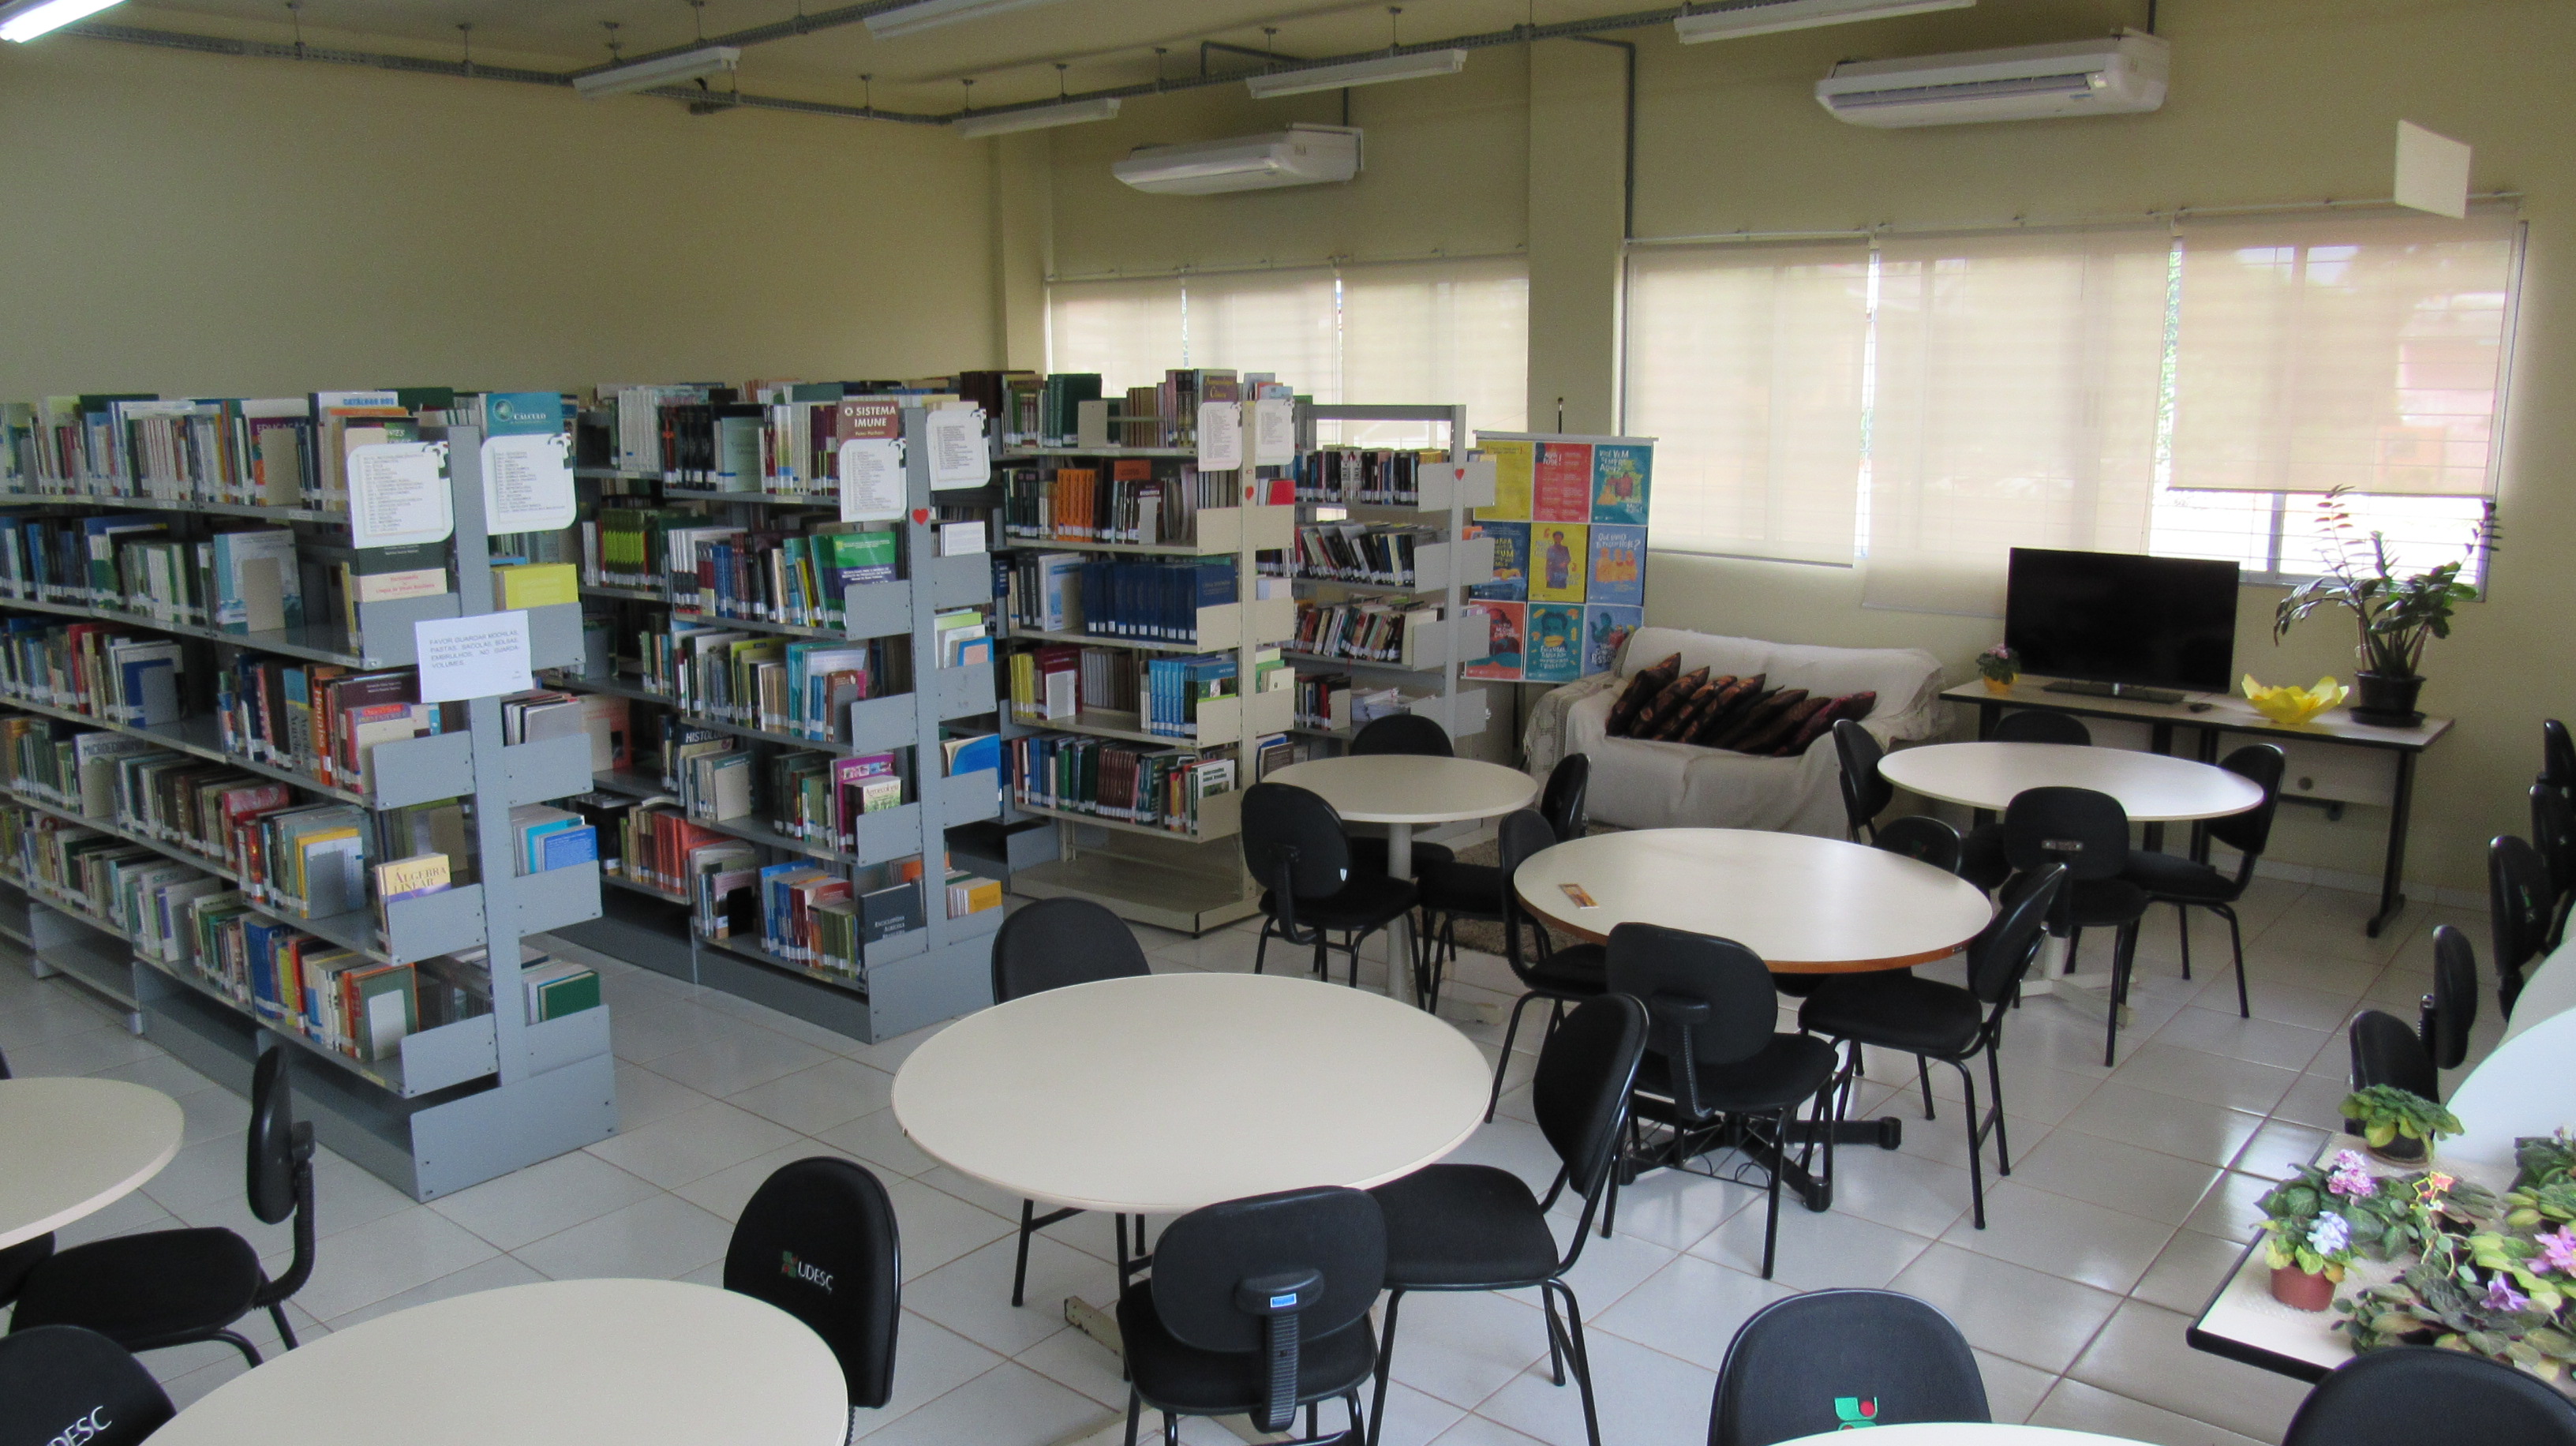 <p><strong>Biblioteca Udesc Oeste<br />
Chapecó</strong></p>
